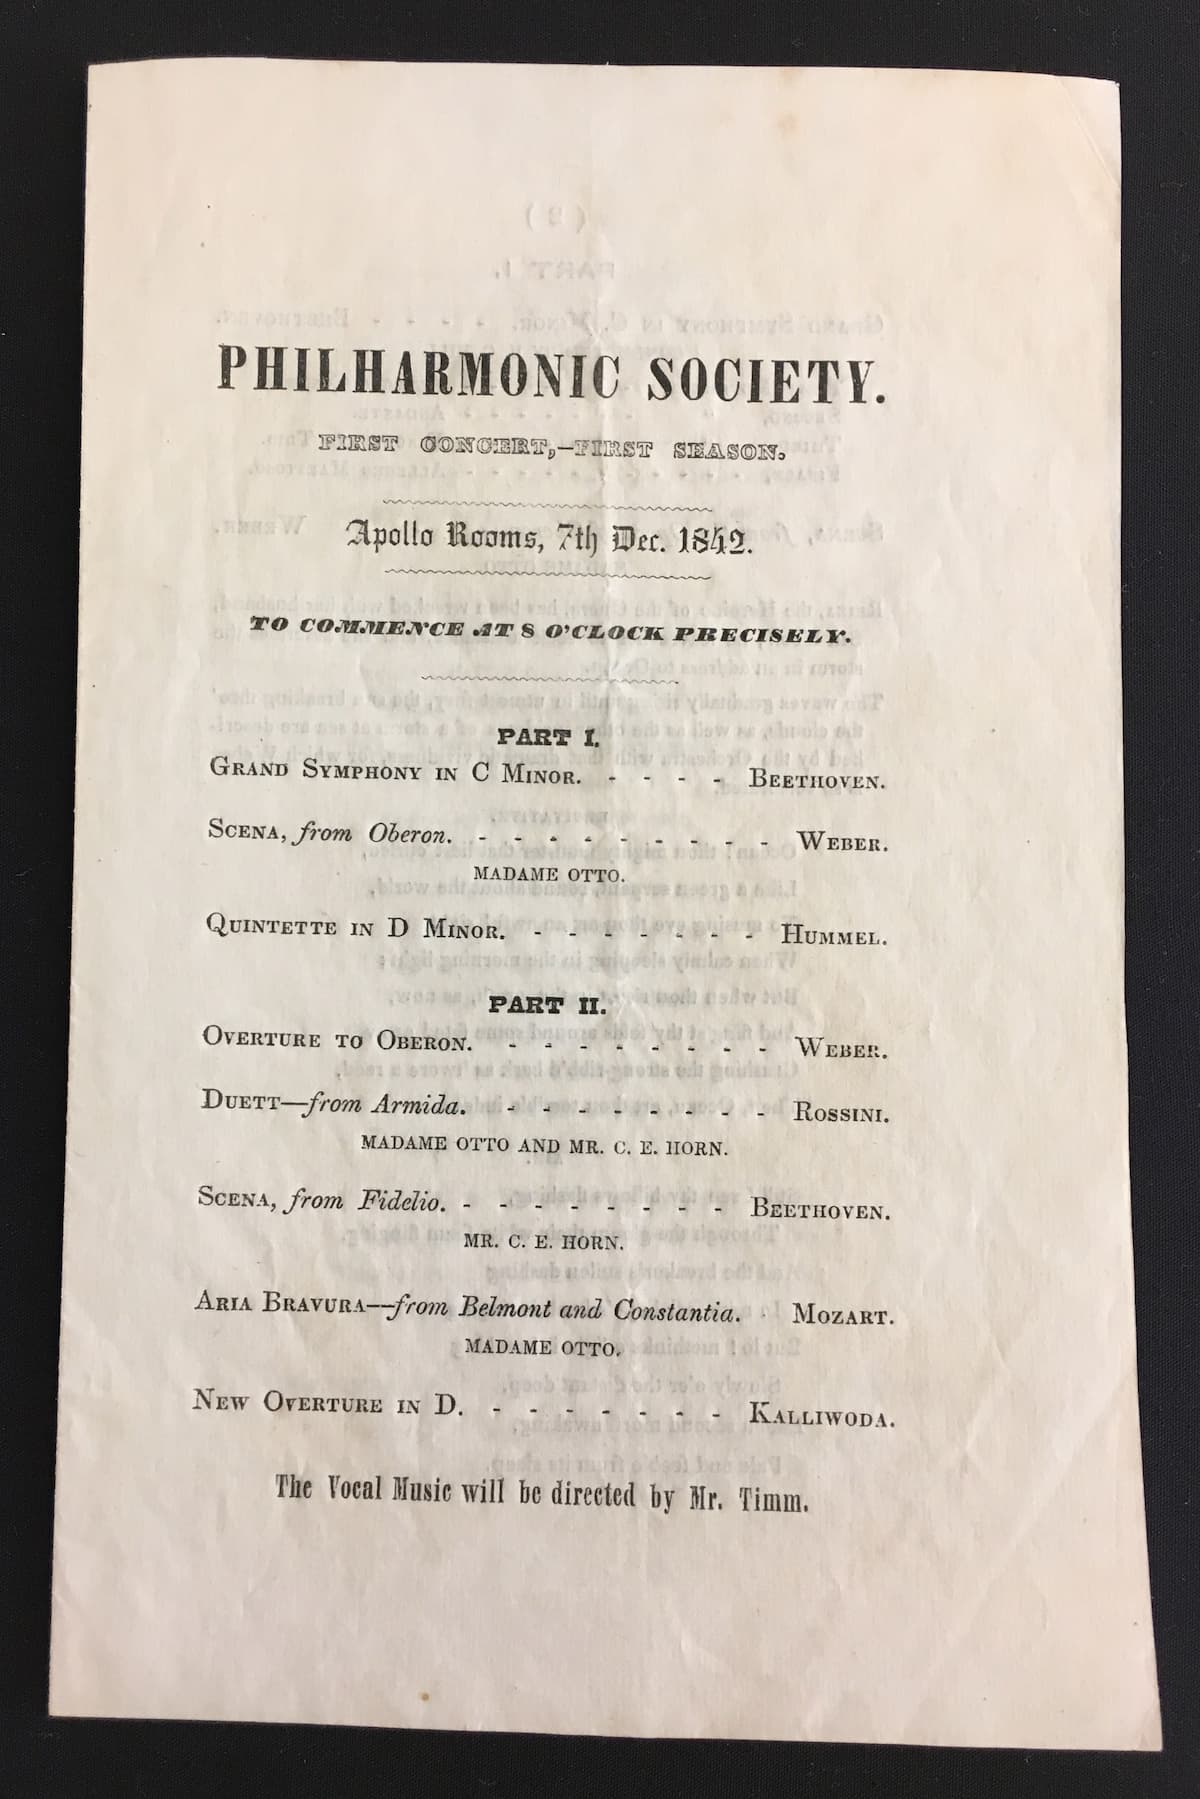 Philharmonic Society of New York first concert program